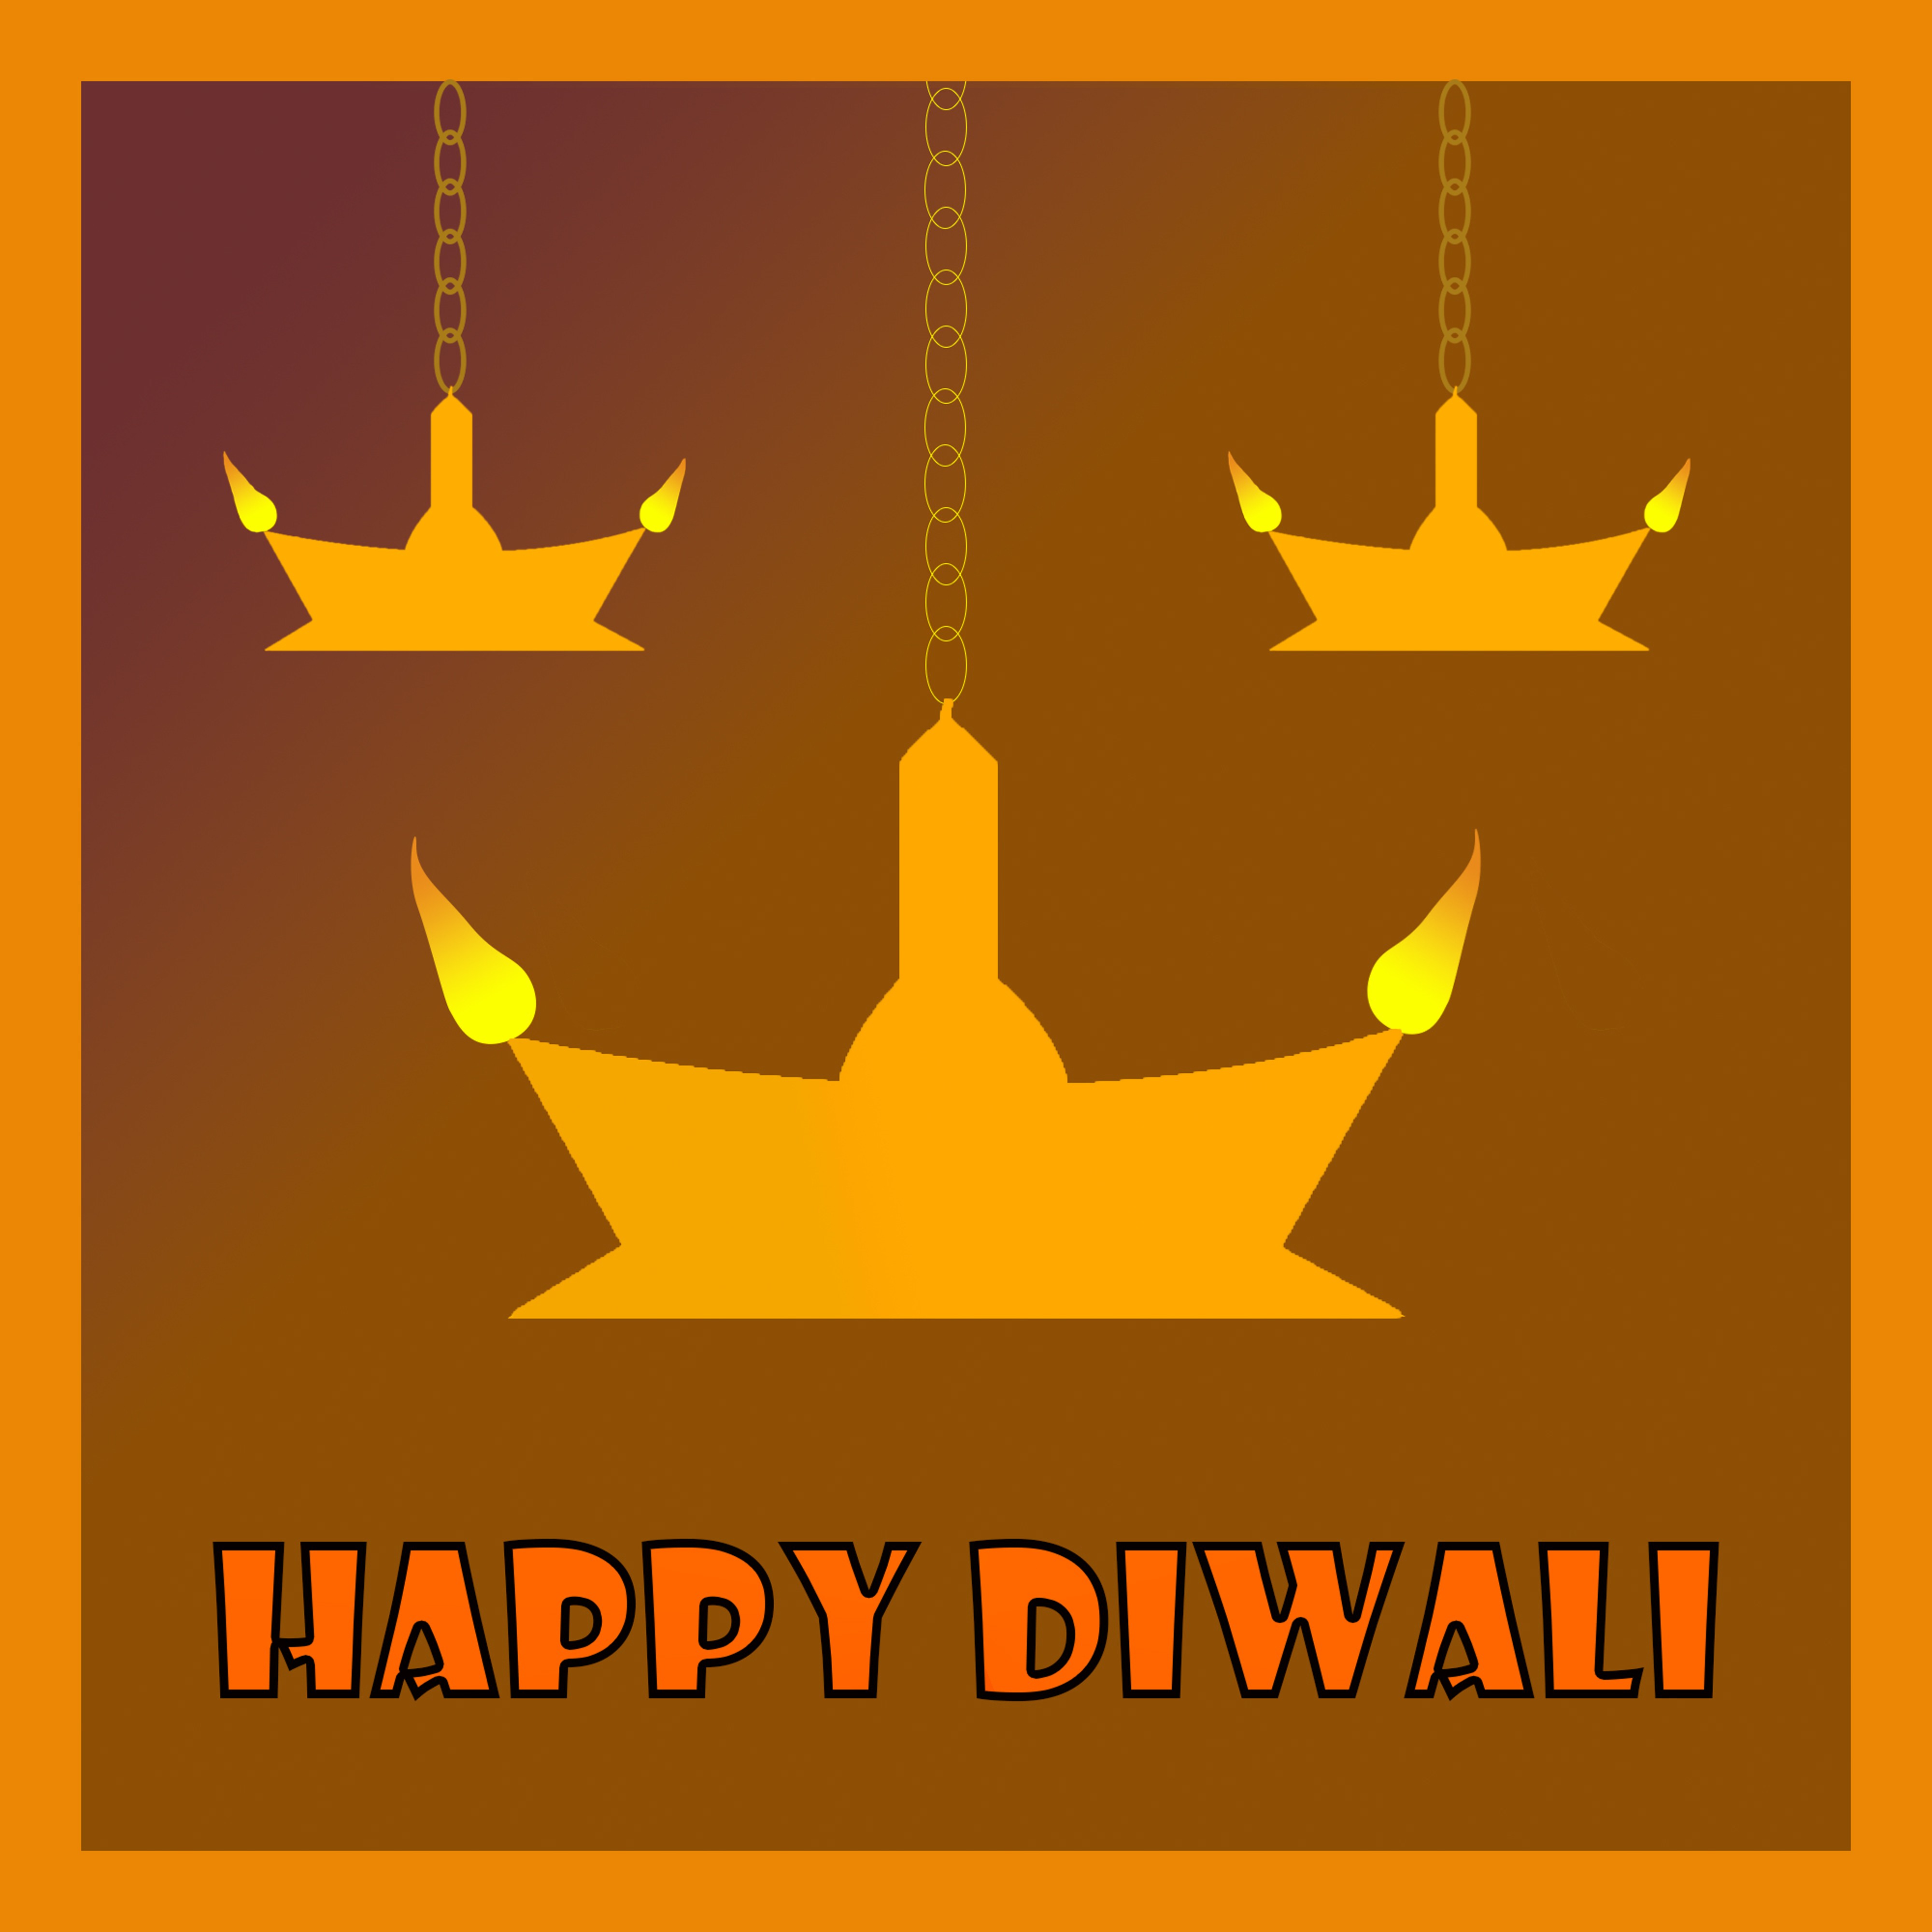 Diwali Greeting preview image.